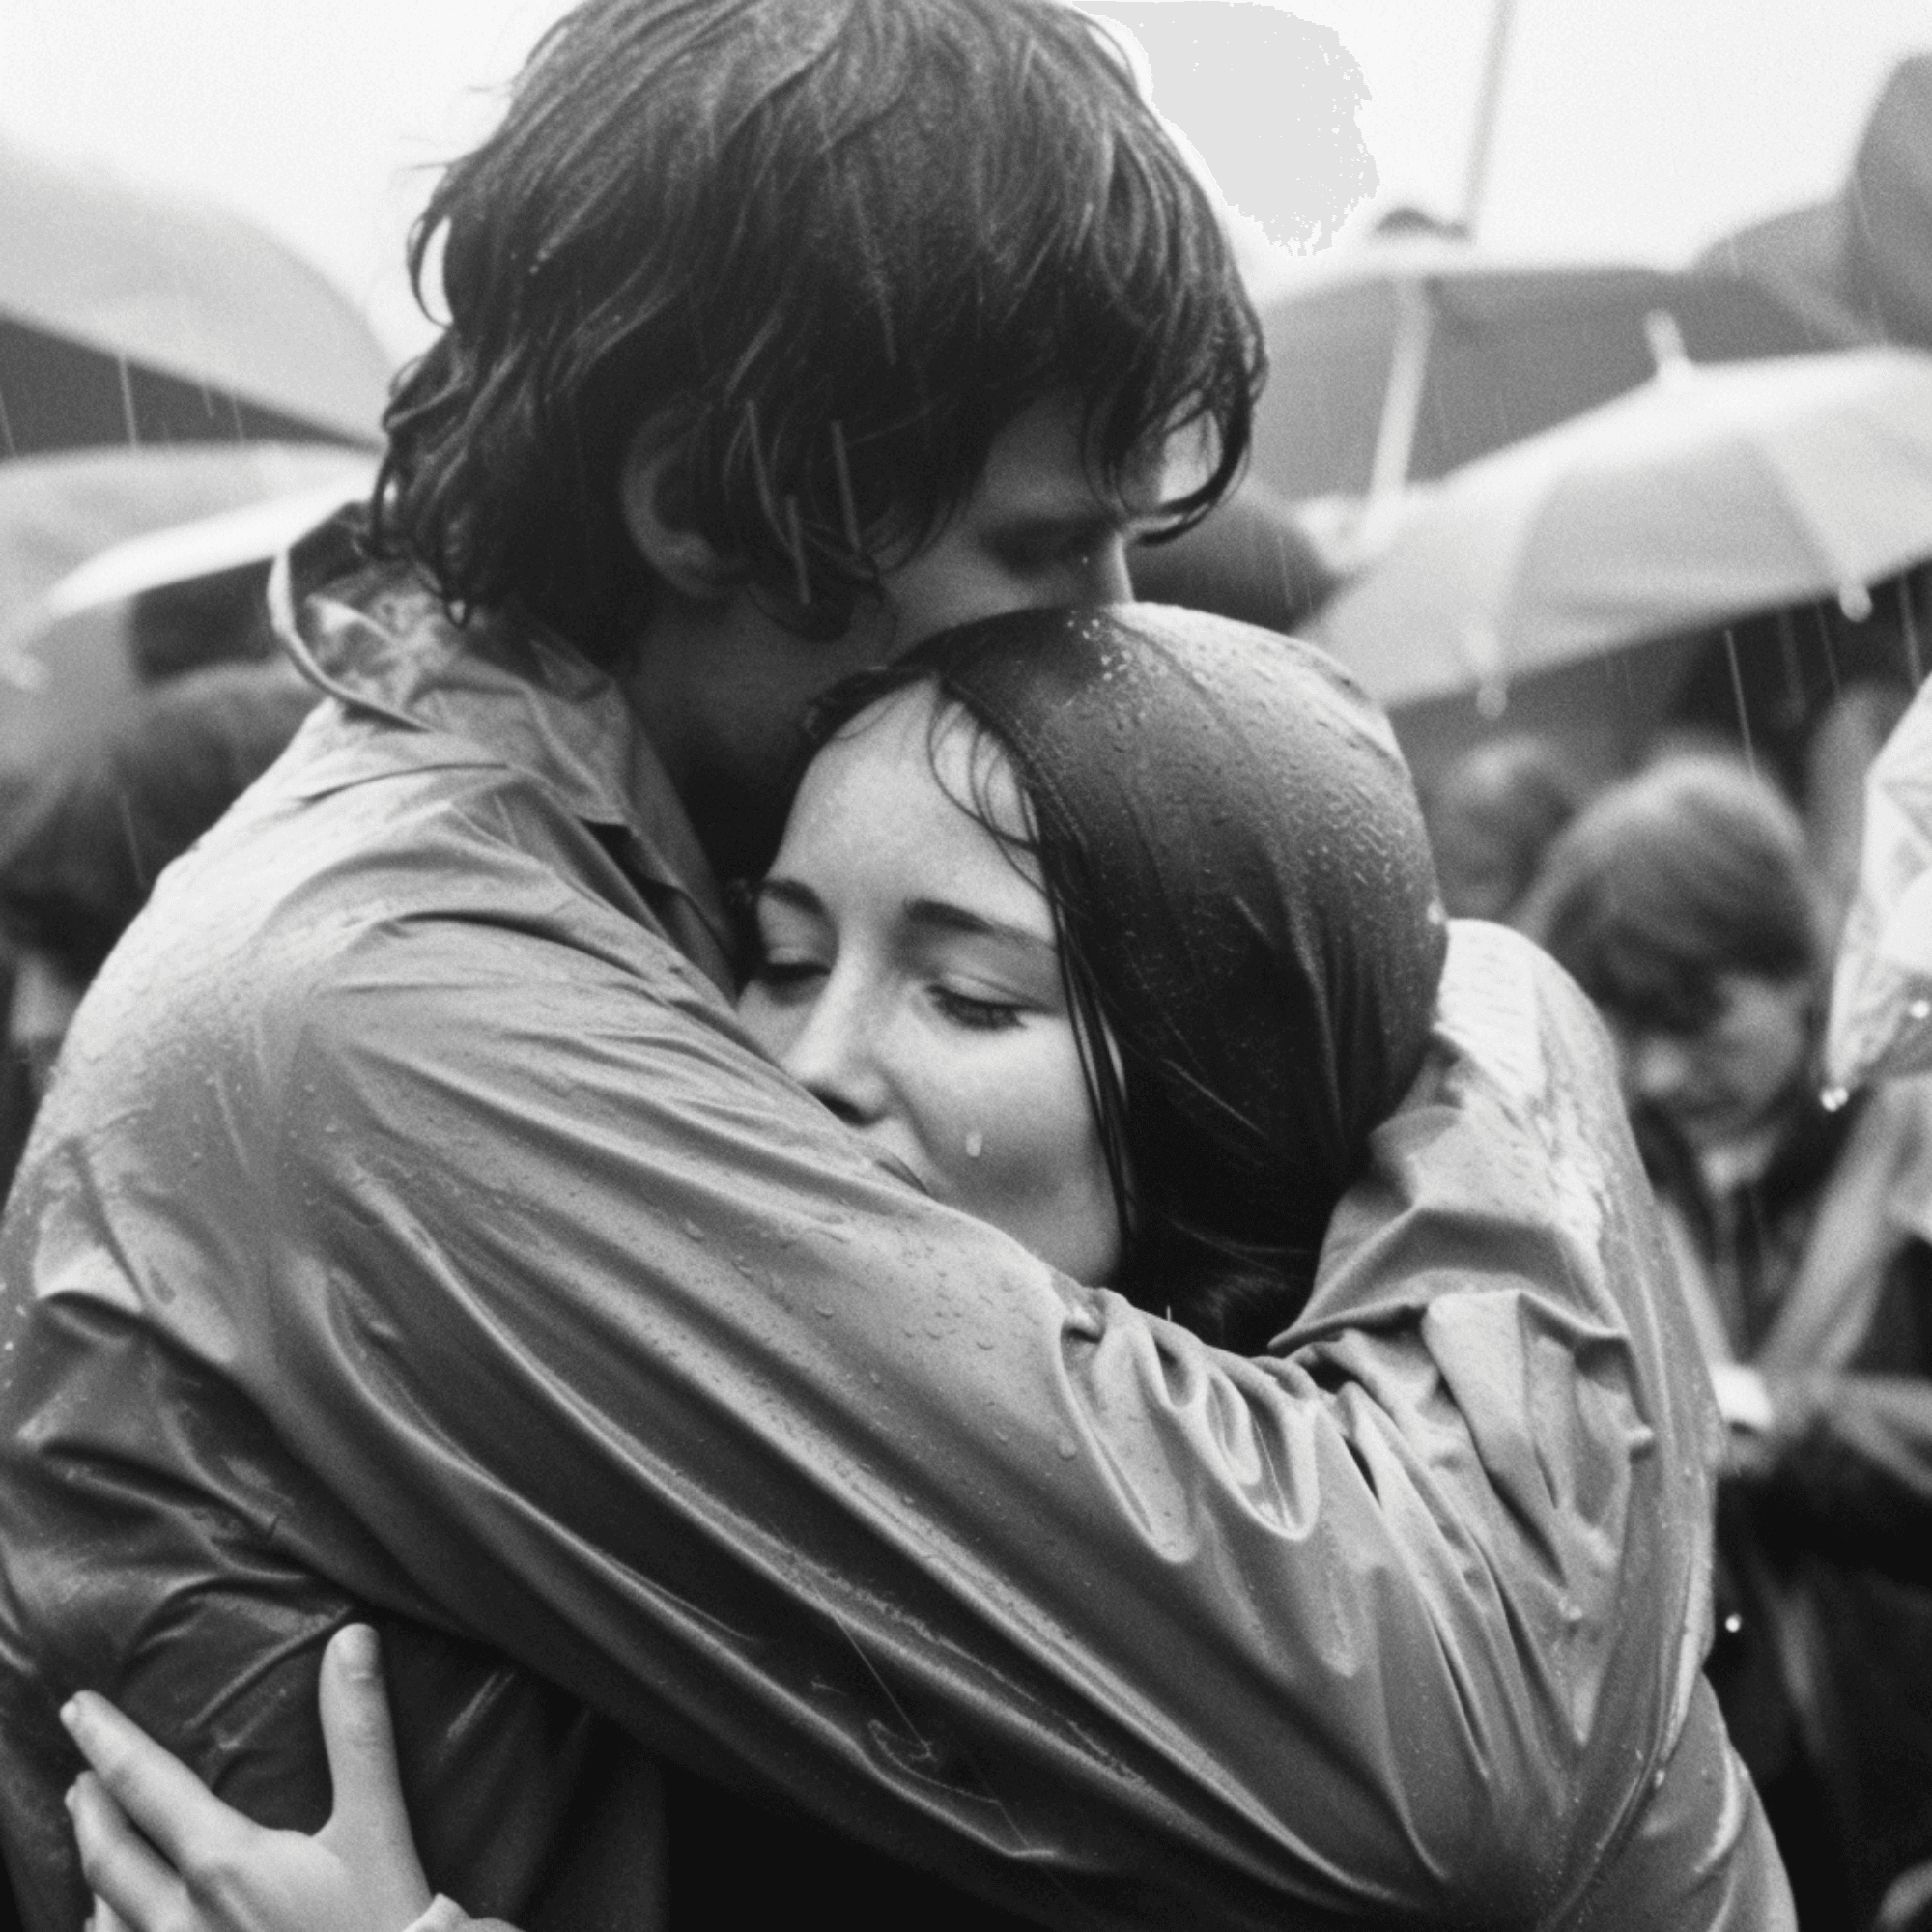 Love in the rain at Woodstock